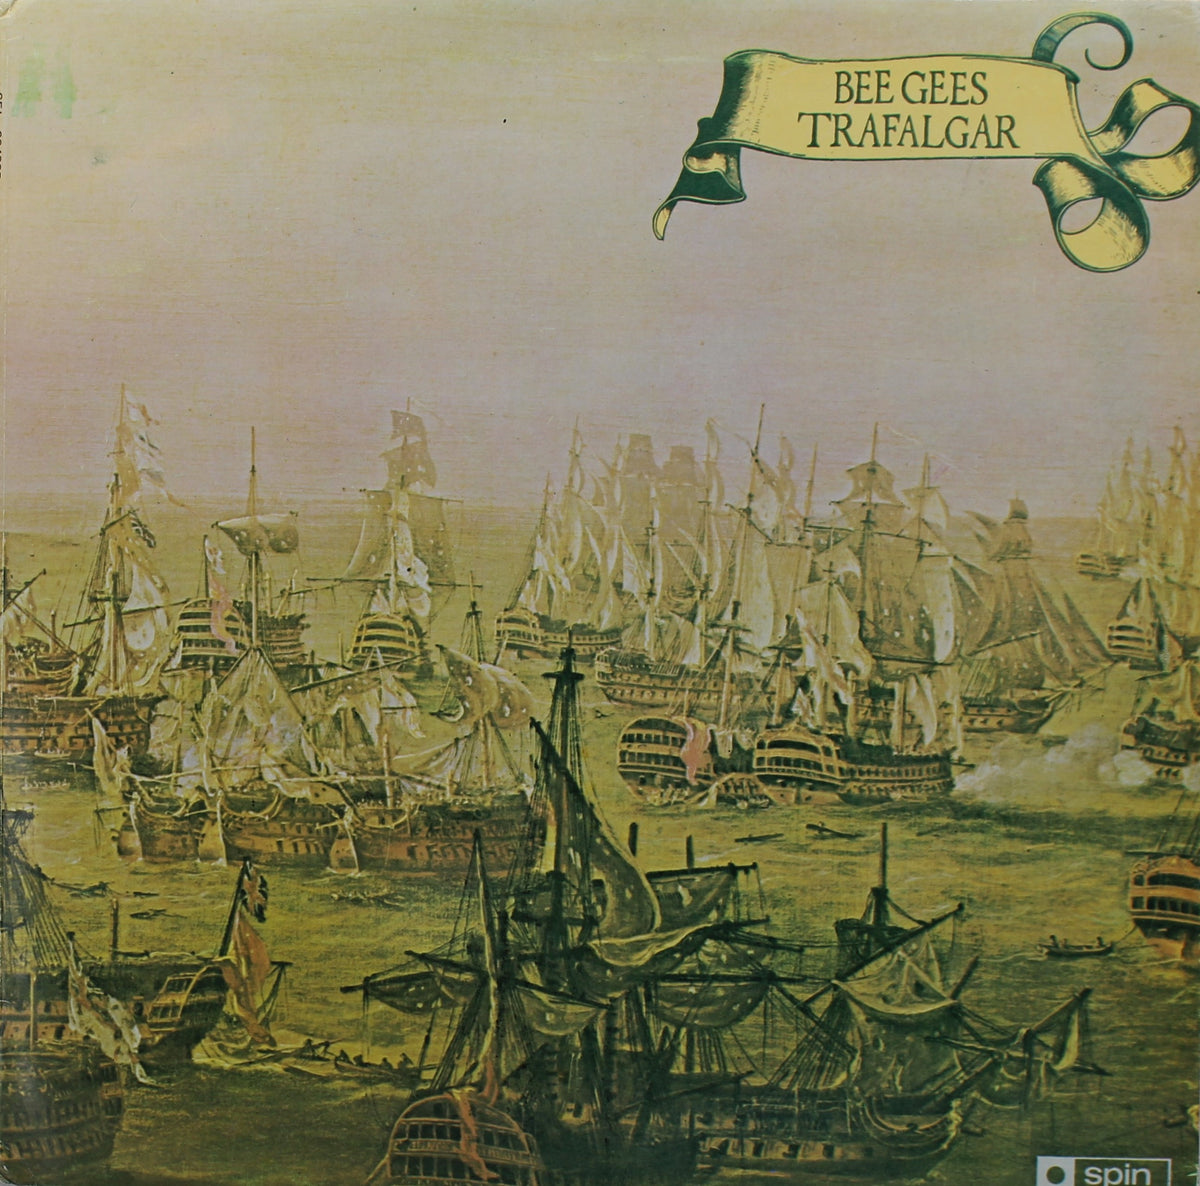 Bee Gees – Trafalgar, Vinyl, LP, Album, Stereo, Gatefold, New Zealand 1971